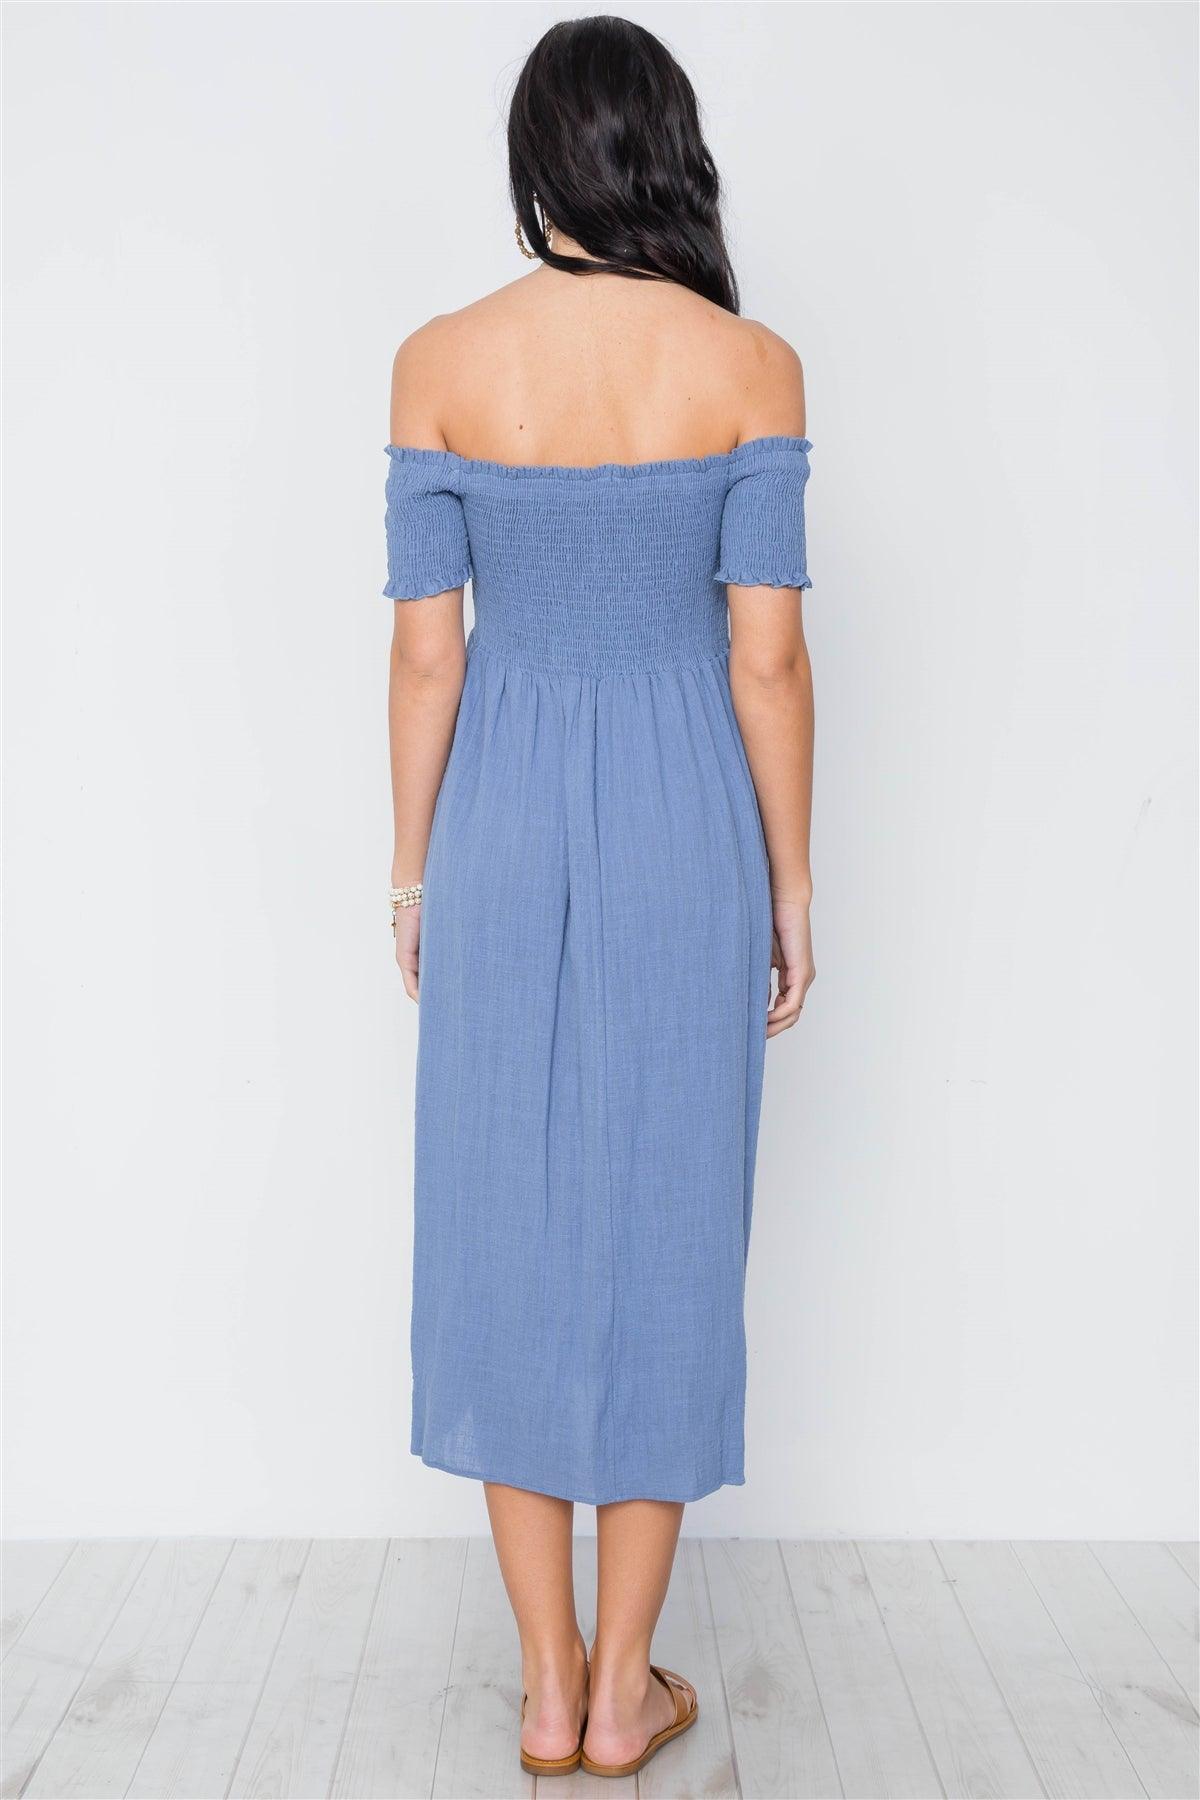 Blue Smoked Off-The Shoulder Short Sleeve Boho Dress /3-2-1